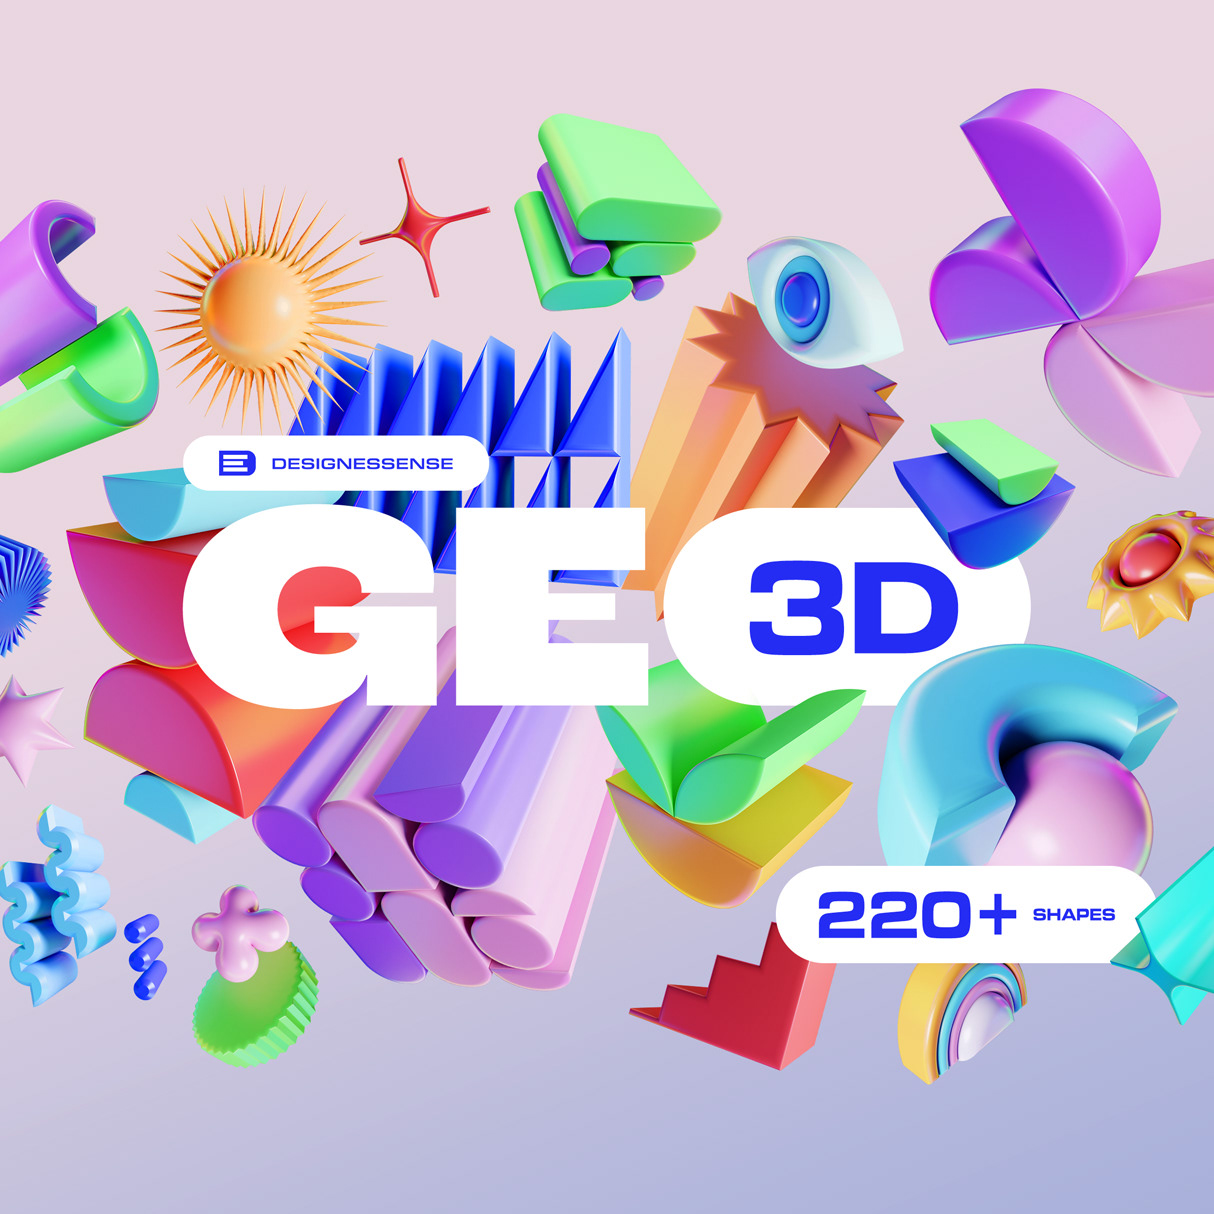 GEO3D by Designessense rendition image